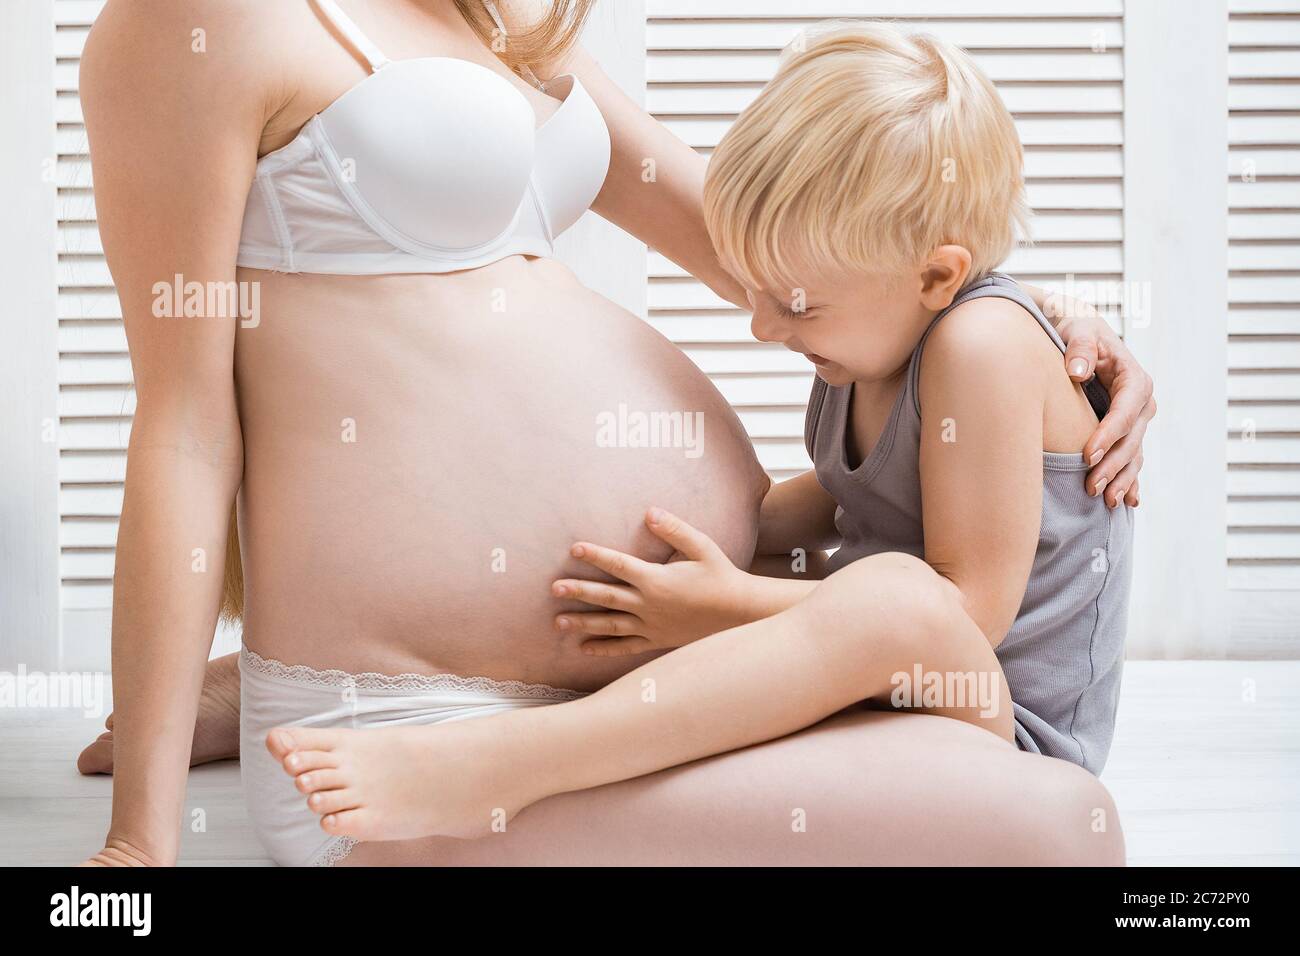 Son getting mom pregnant